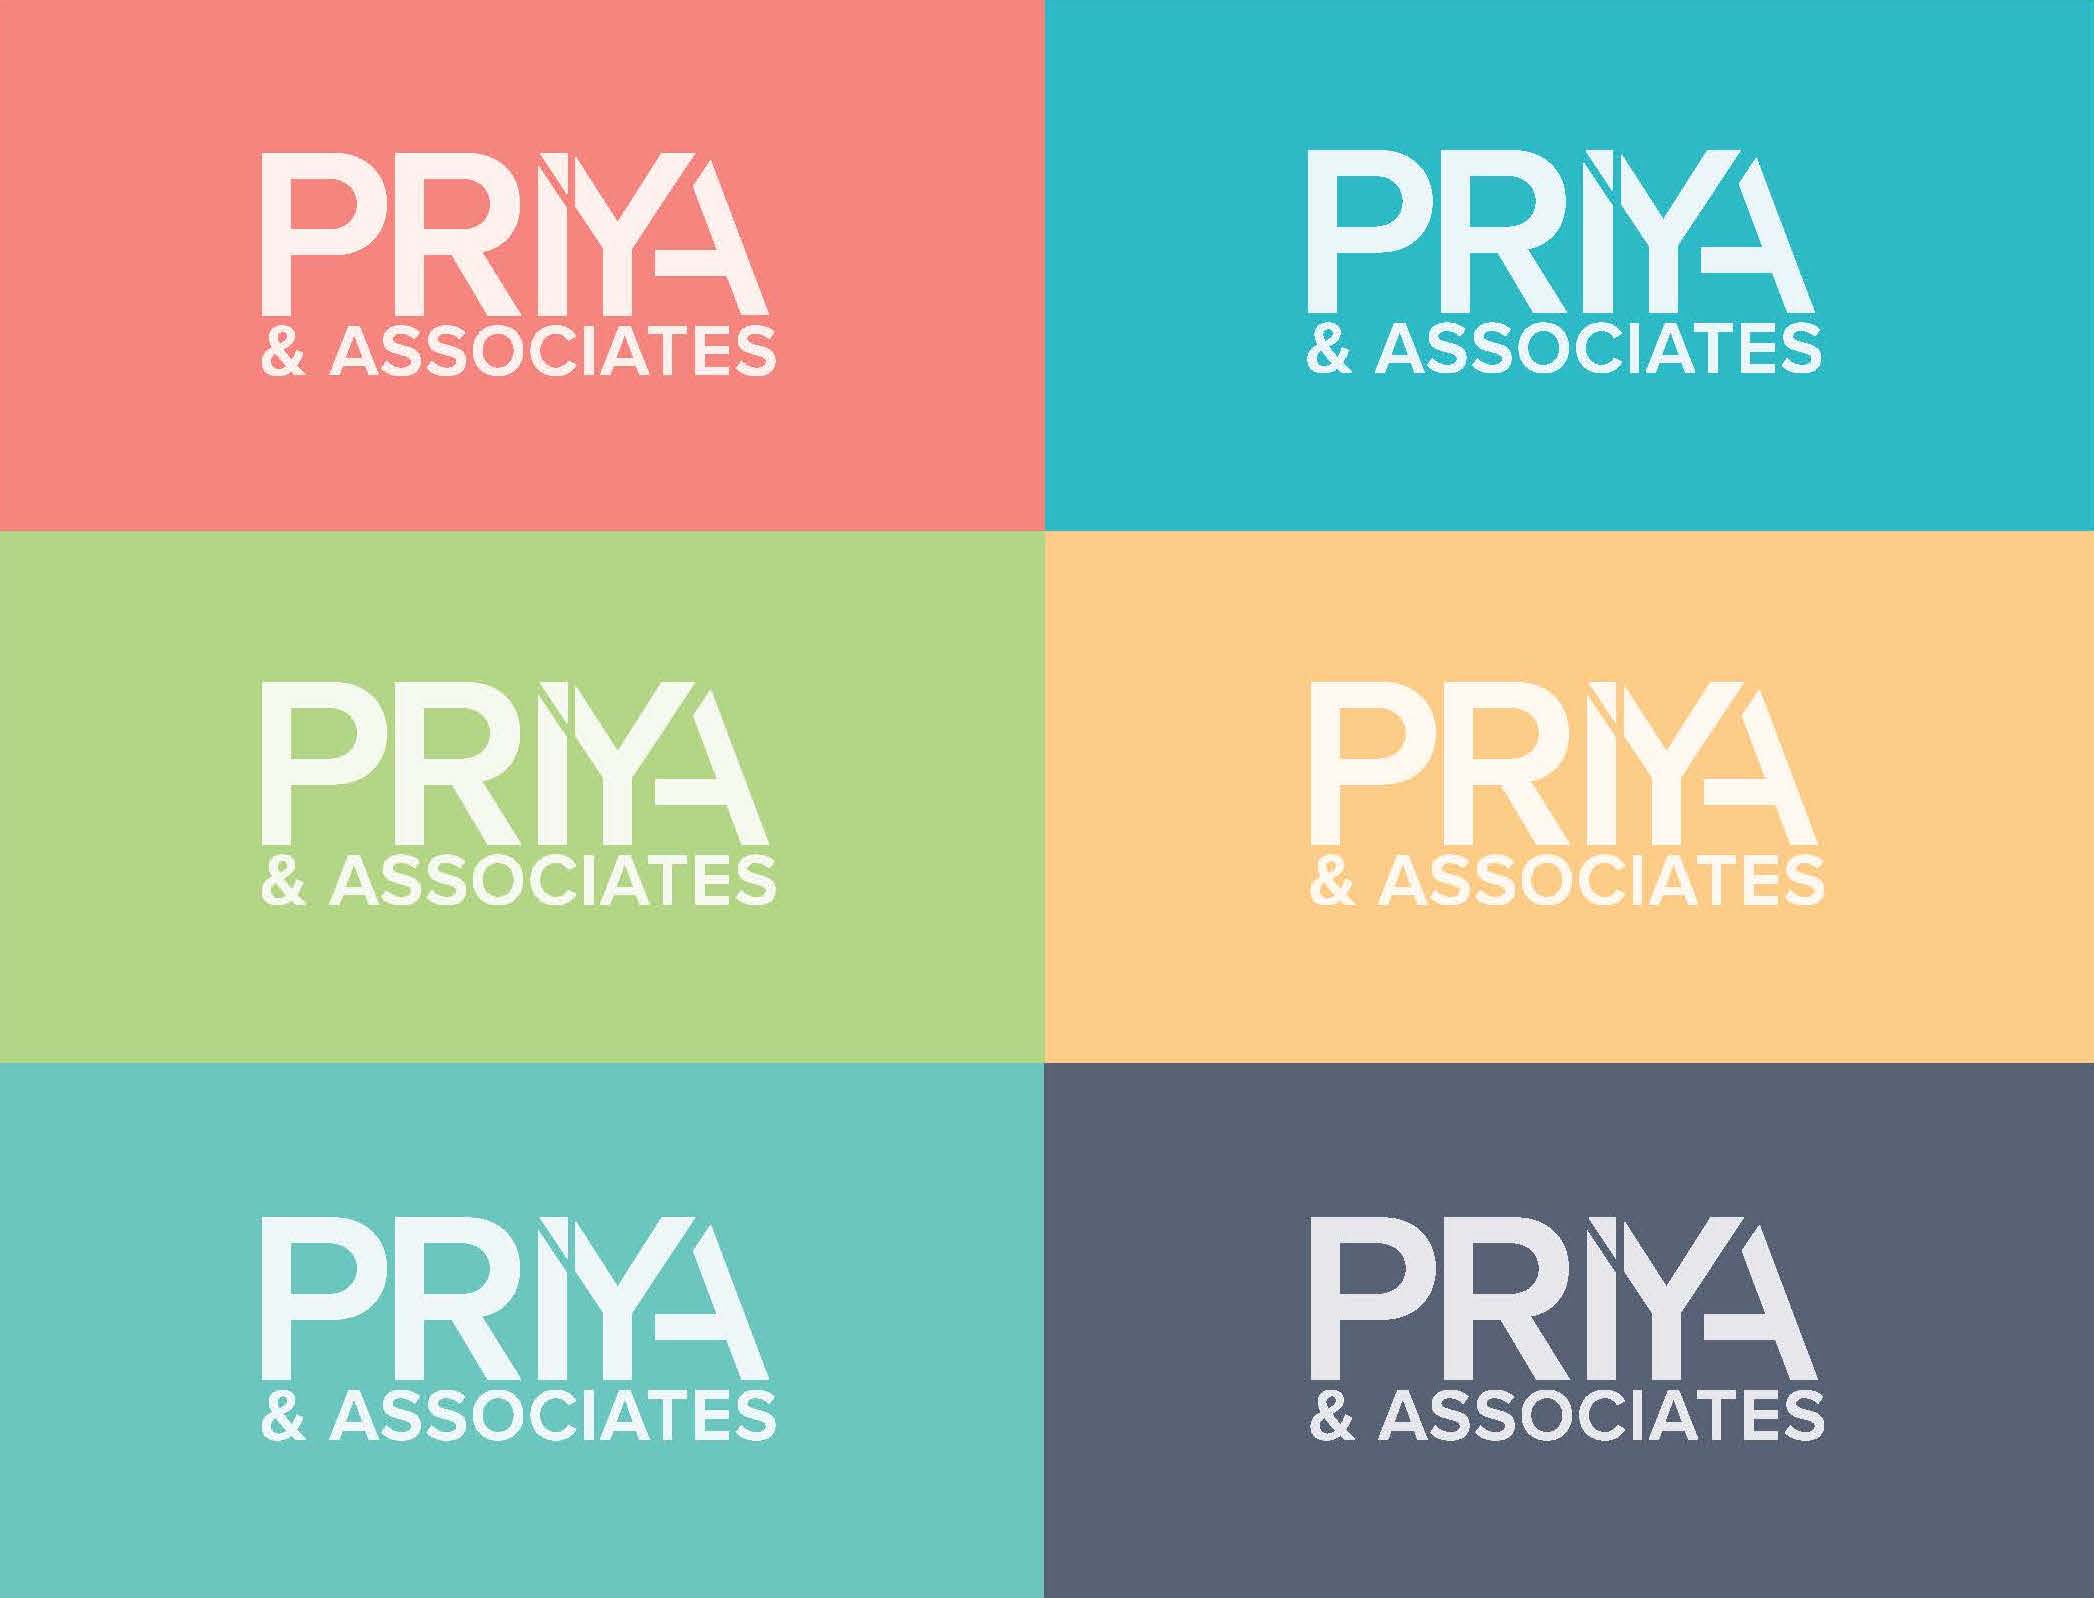 Priya & Associates